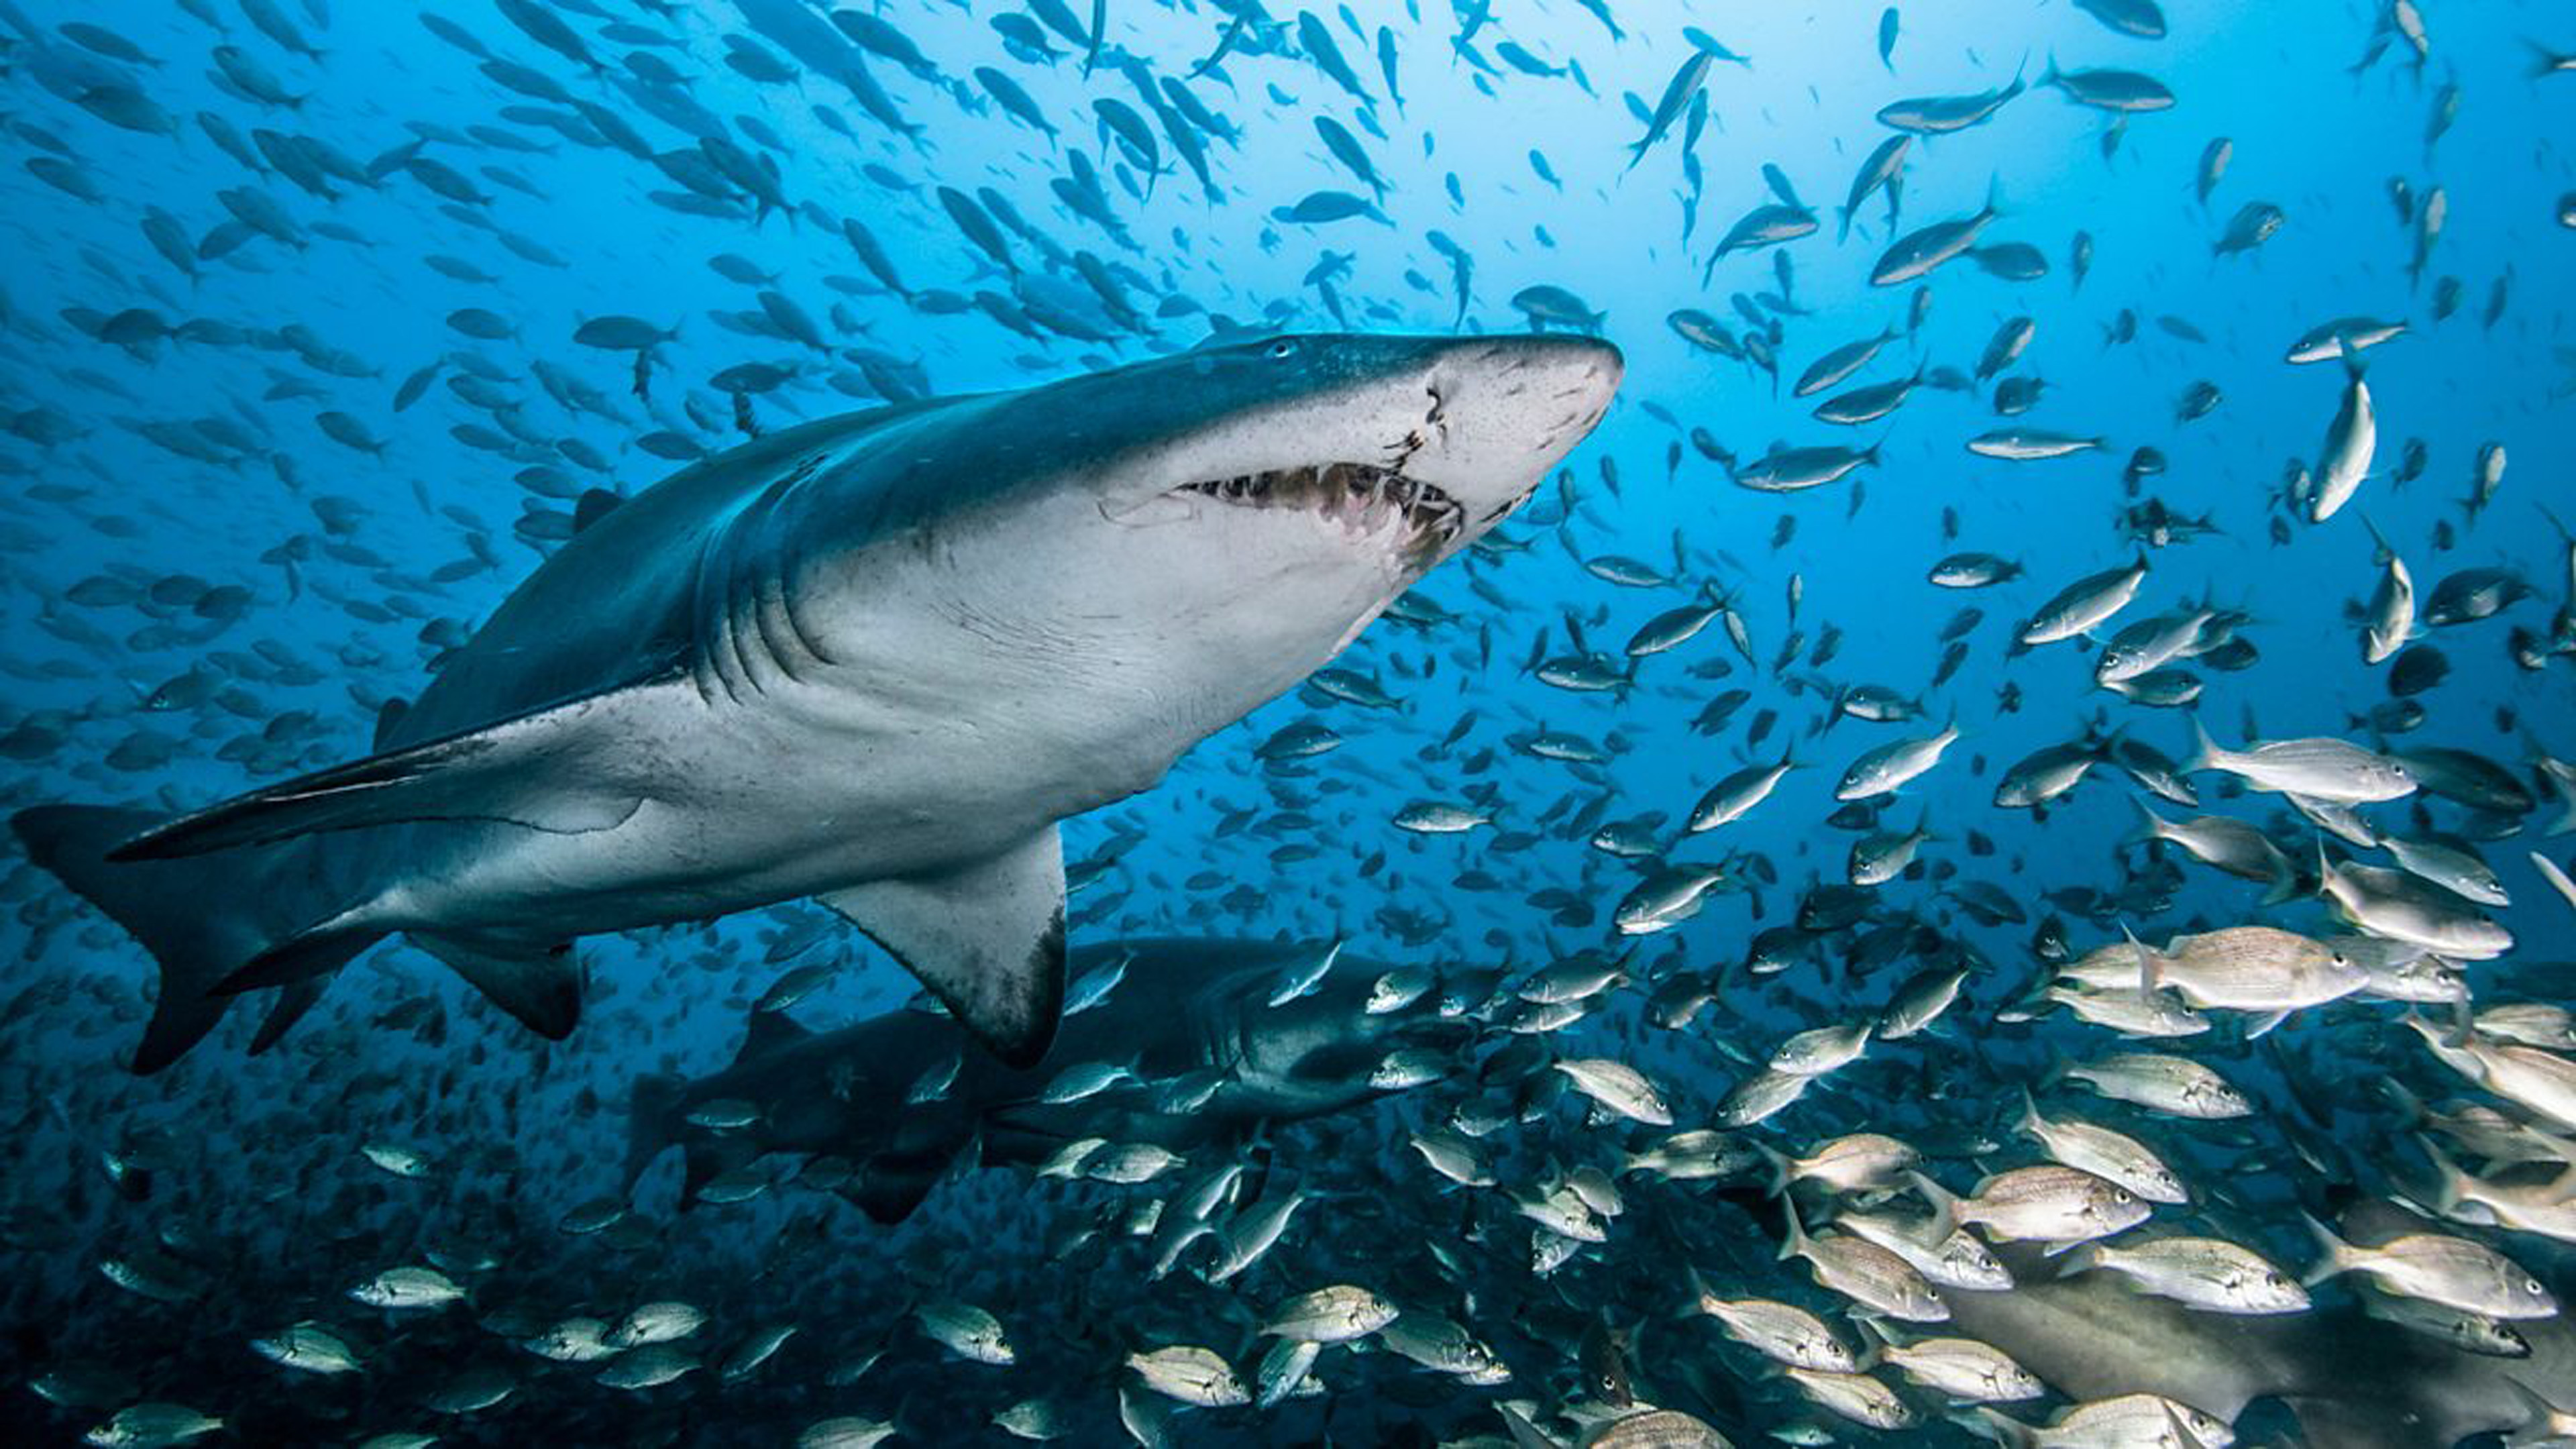 Ocean Underwater World Shark Fish Water Beautiful Hd Wallpaper For Laptop  And Mobile Phone Download : 